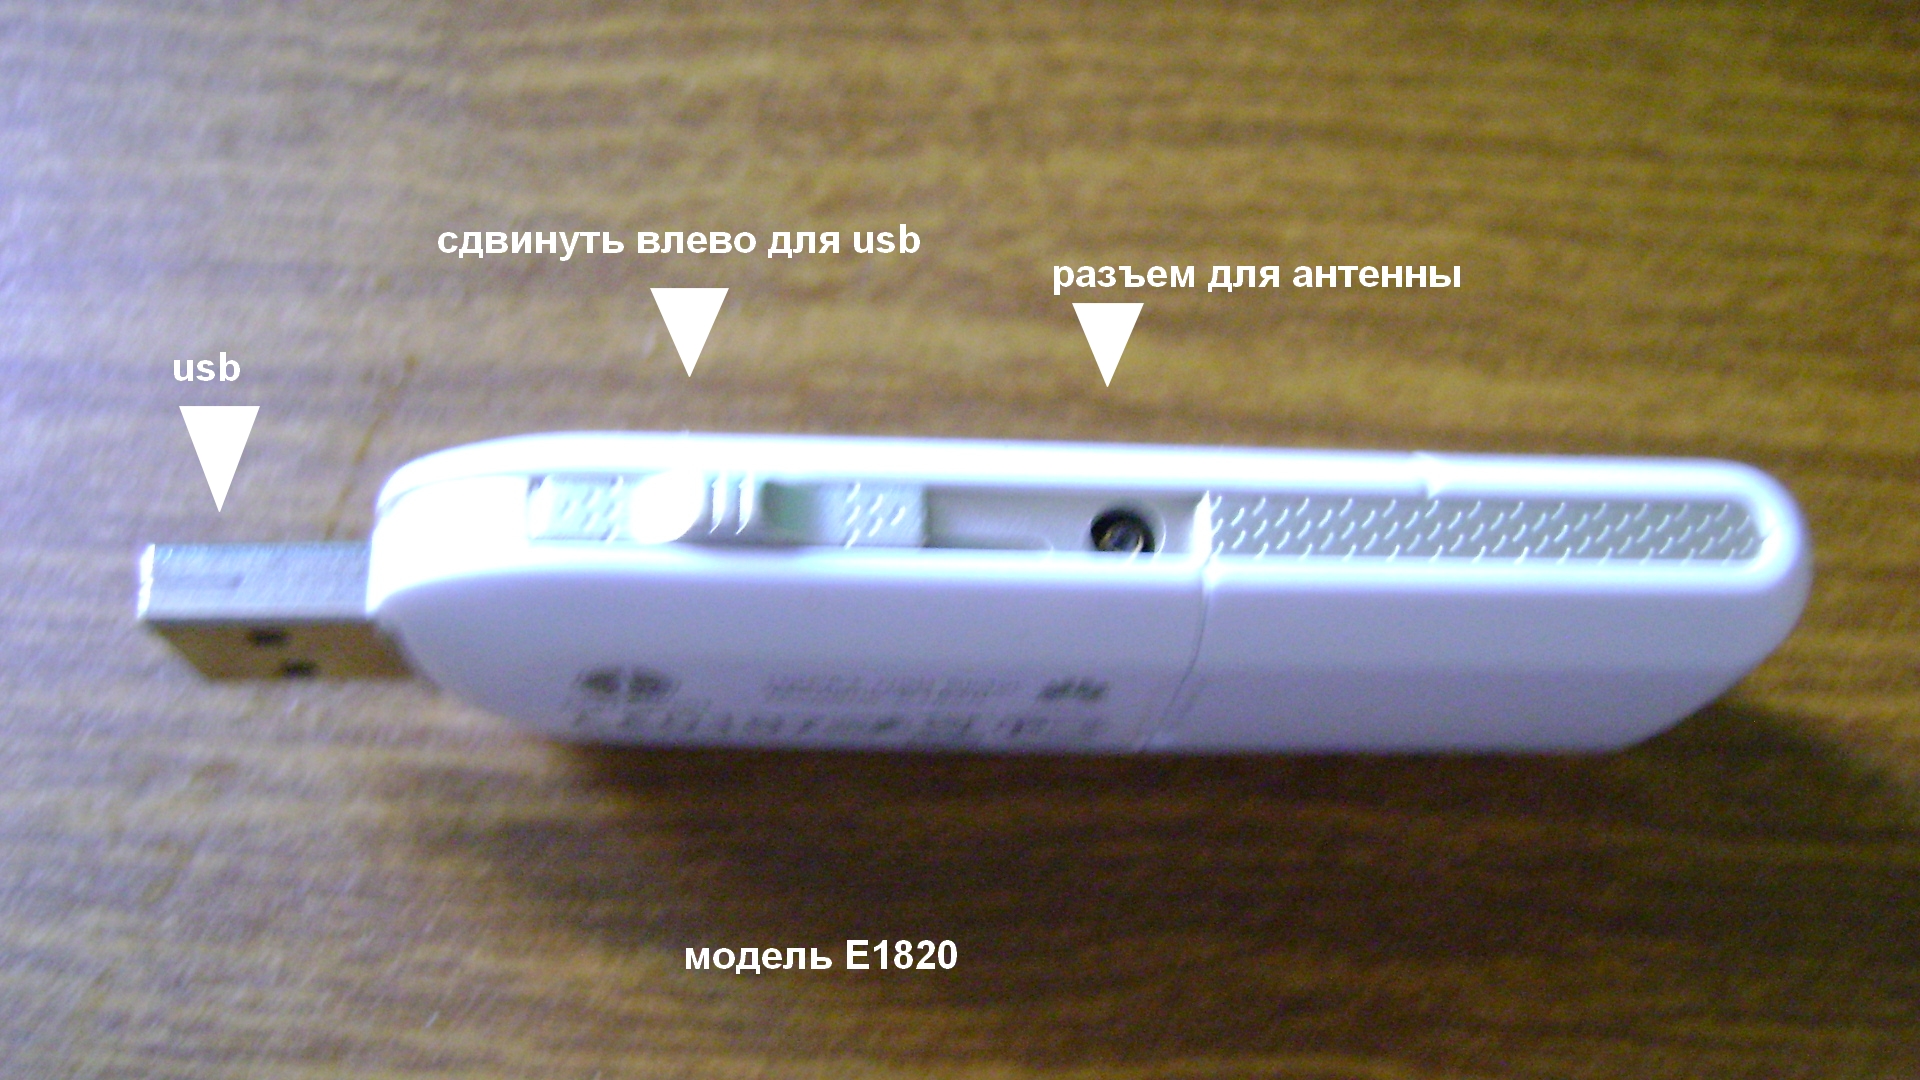 Модем Мегафон Е1820